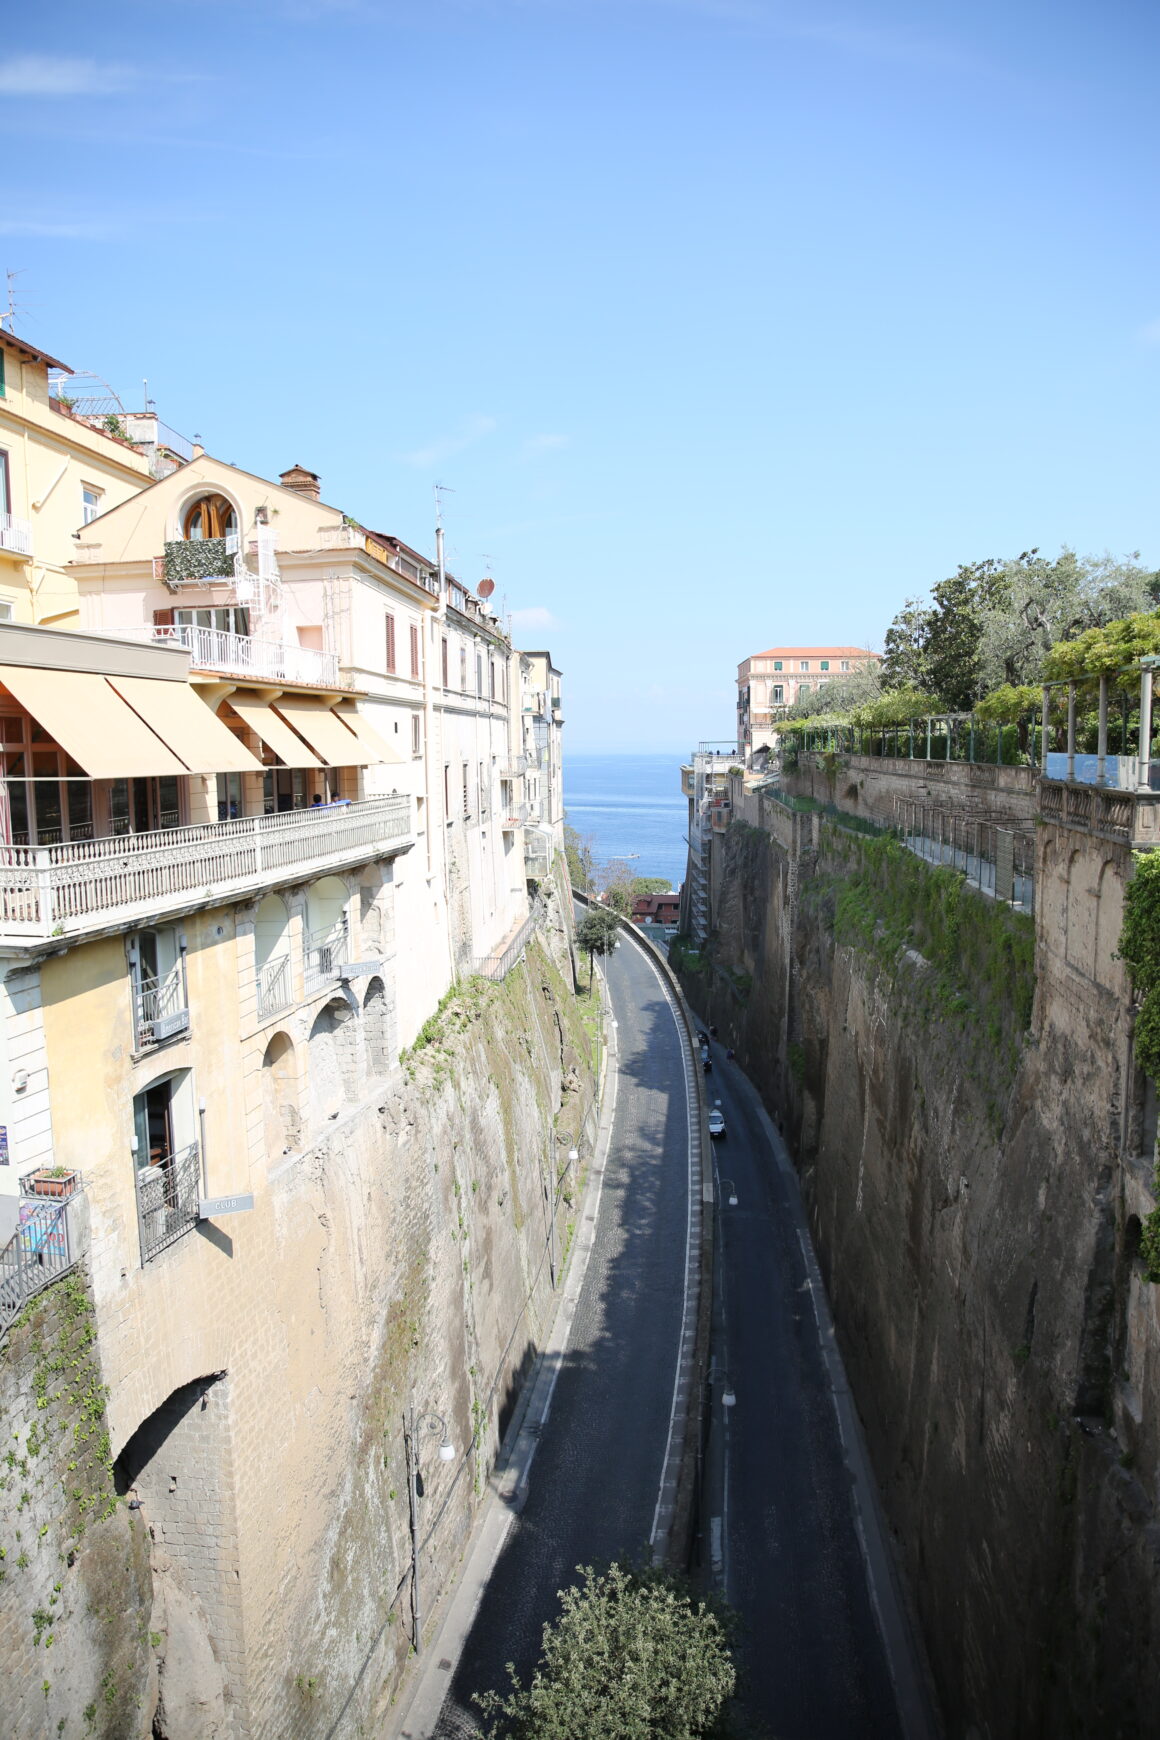 Sorrento on the Amalfi Coast